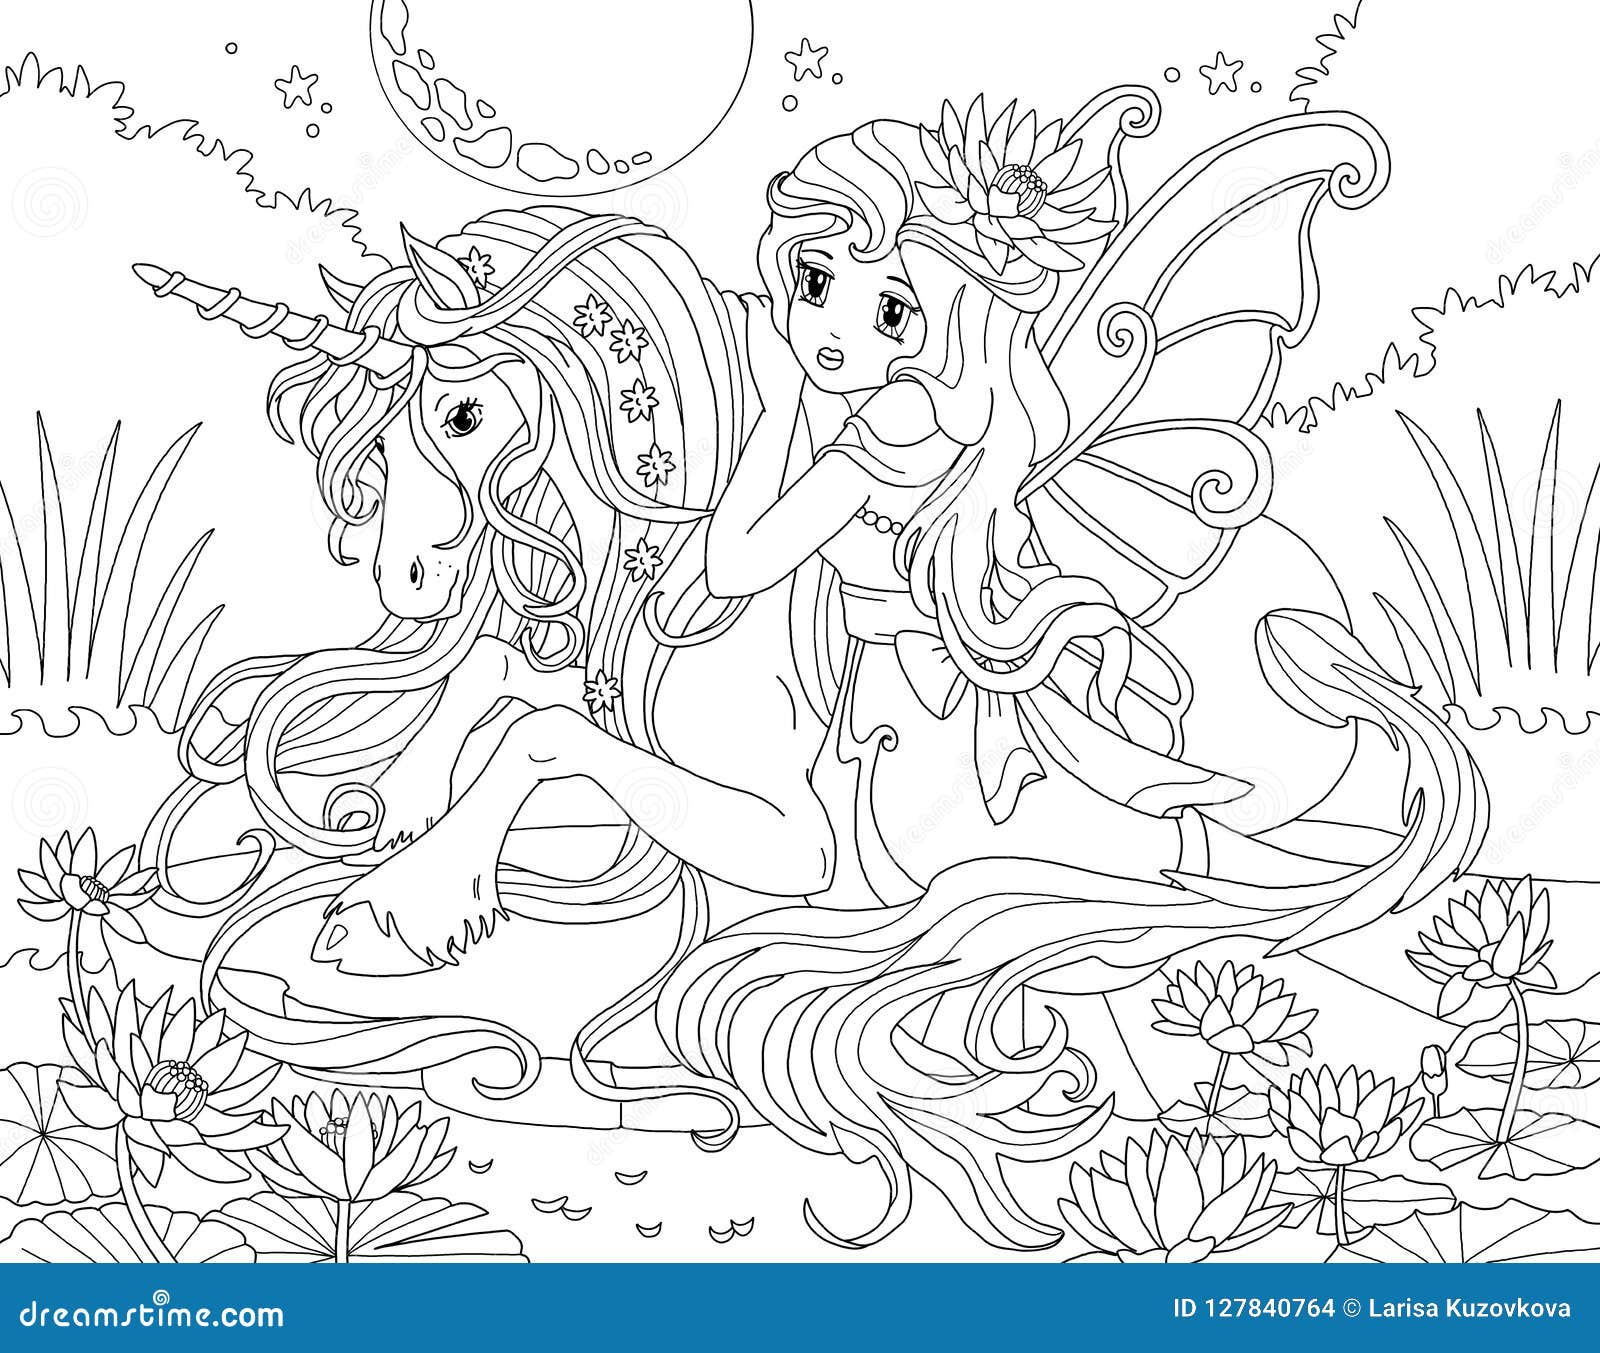 Unicorn Coloring Page Stock Illustrations – 20,1202 Unicorn Coloring ...